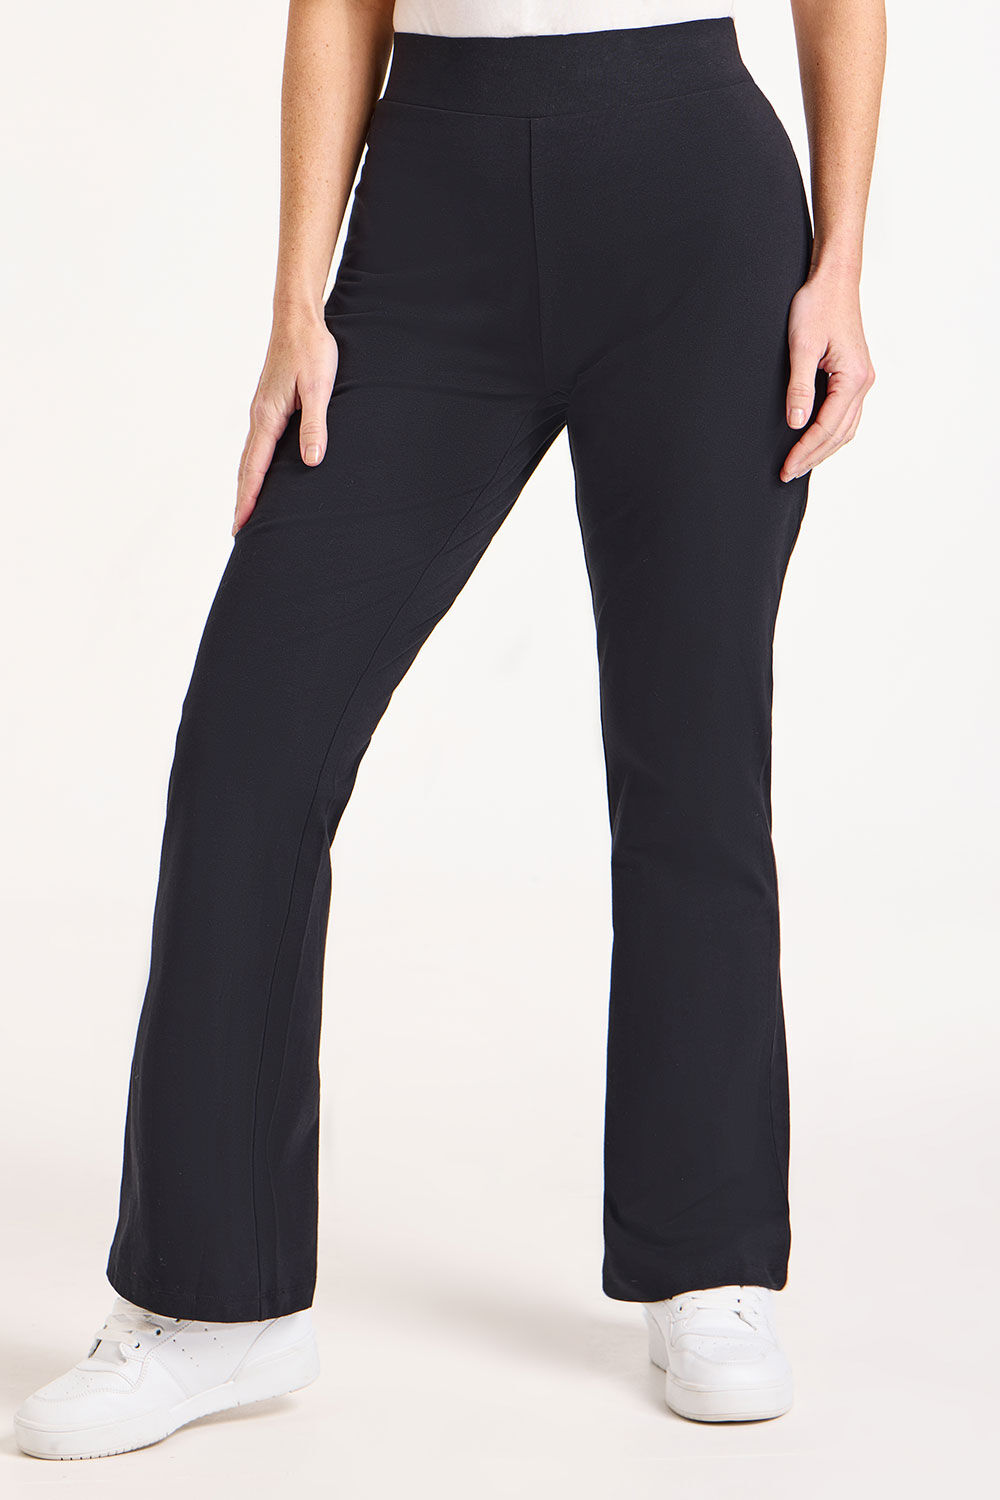 Bonmarche Regular Yoga Pants - Black - Size 10